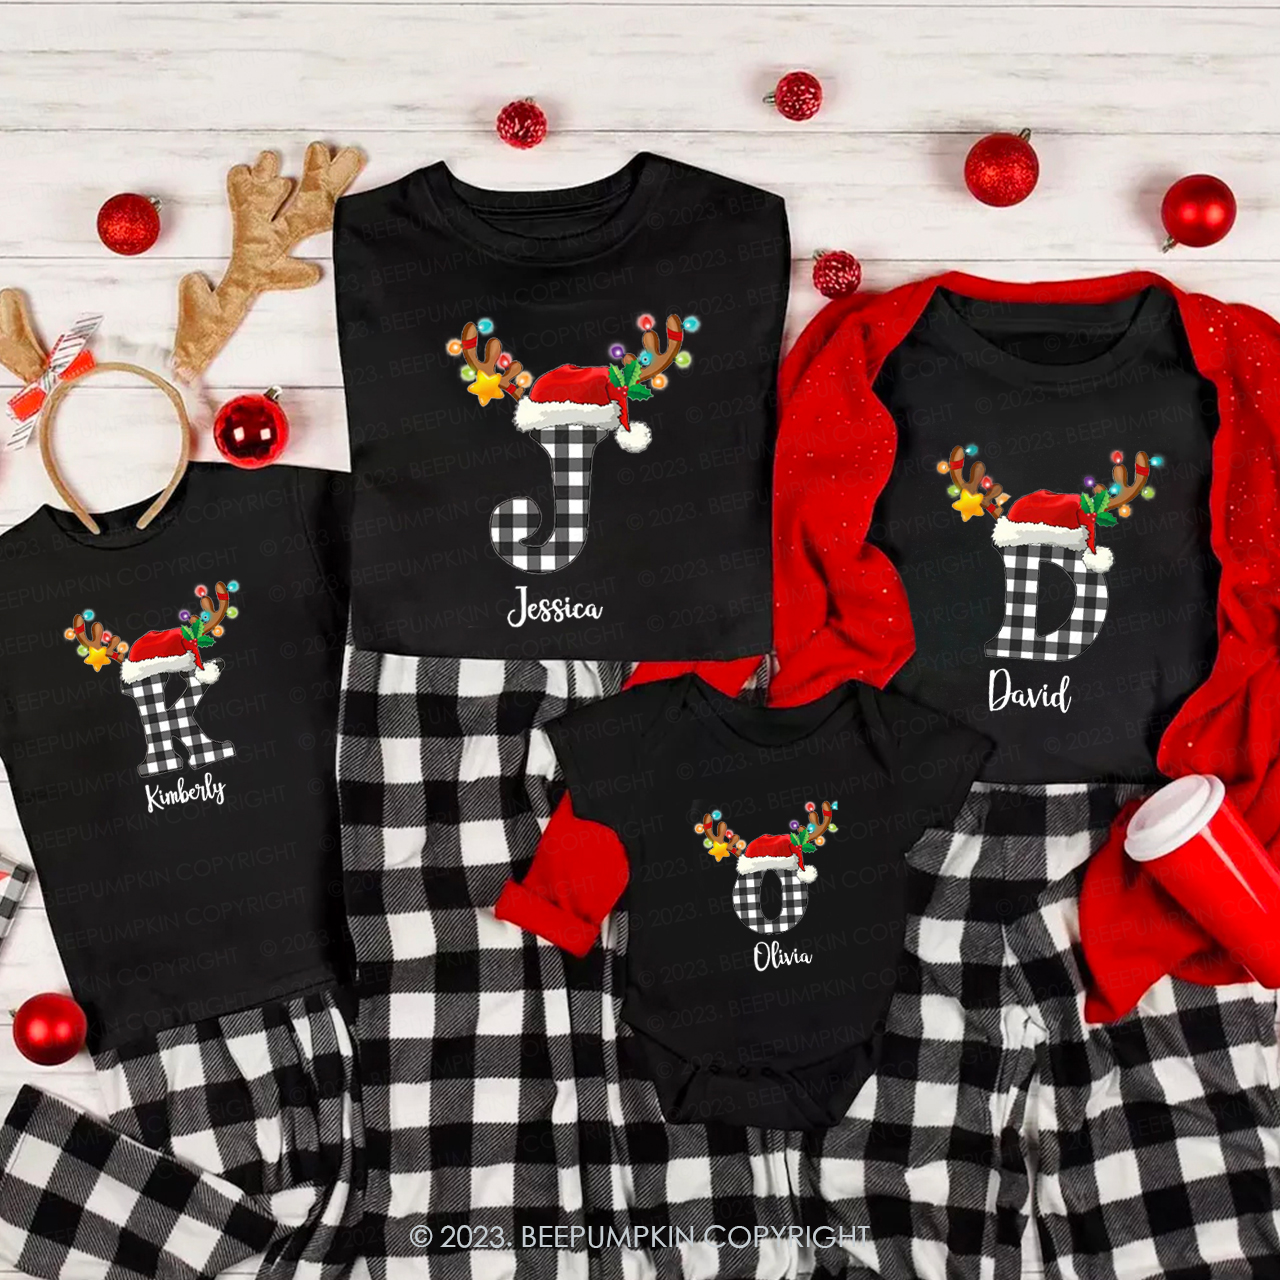 Personalized Monogrammed Christmas Family Matching Shirts Beepumpkin 